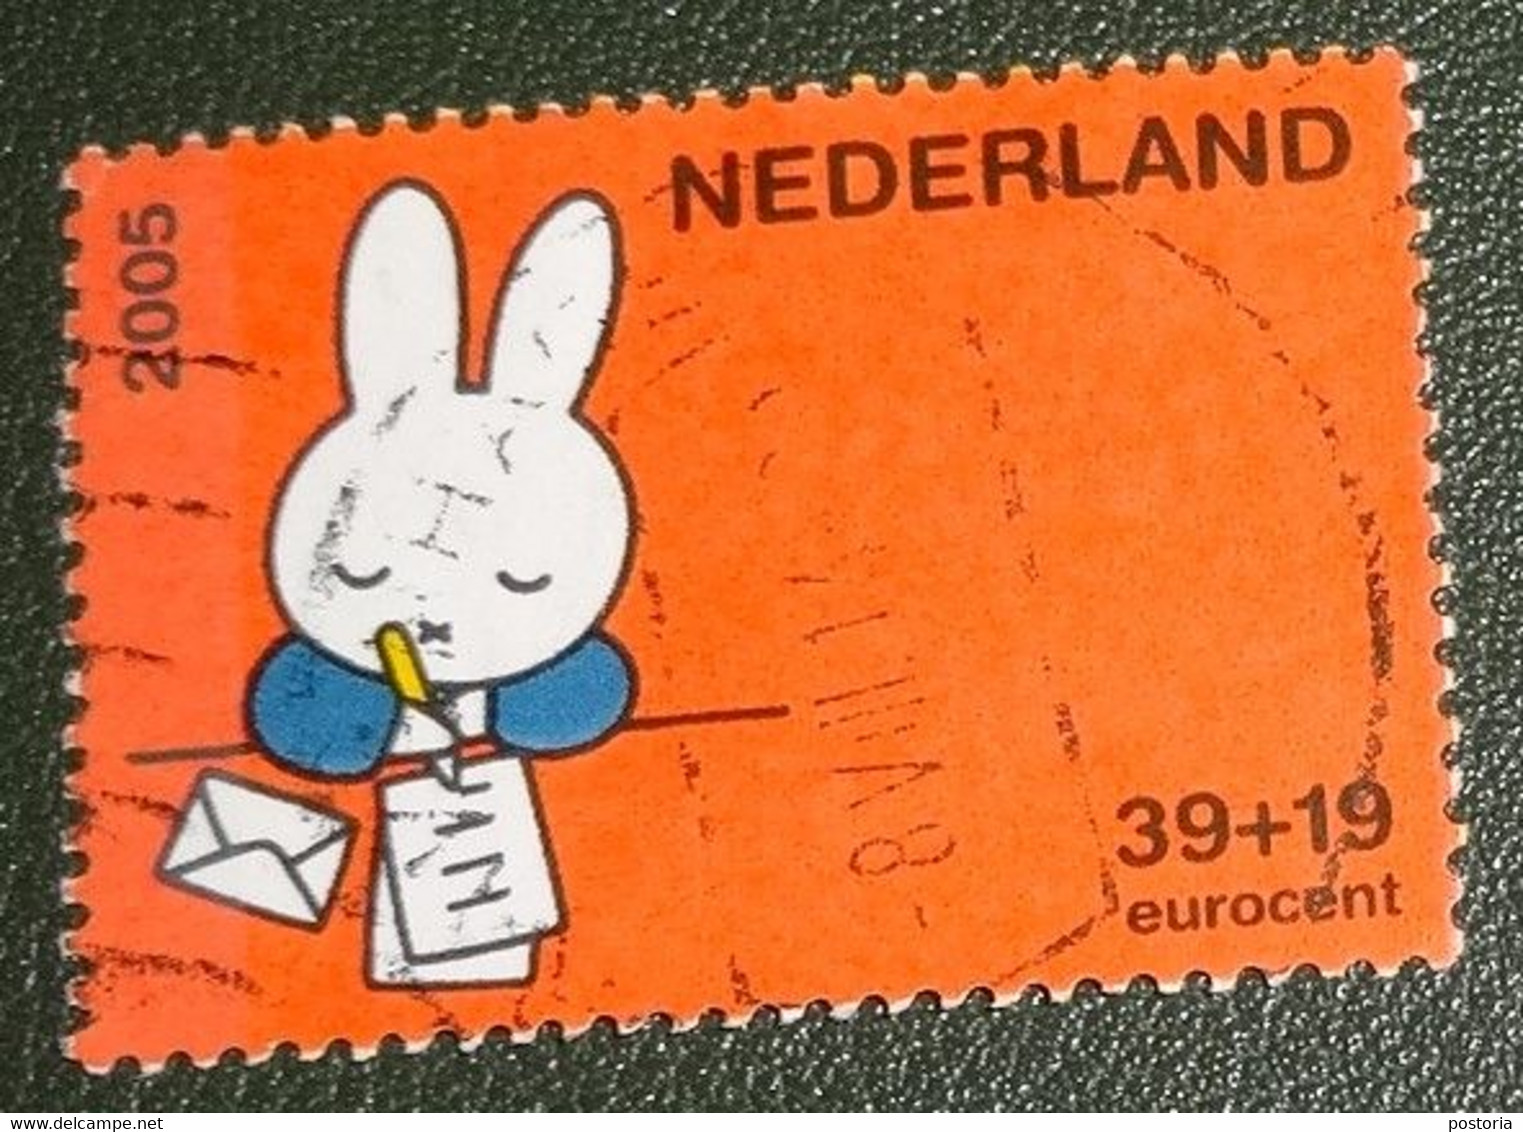 Nederland - NVPH - 2370d - 2005 - Gebruikt - Cancelled - Kinderzegels - Nijntje - Usati